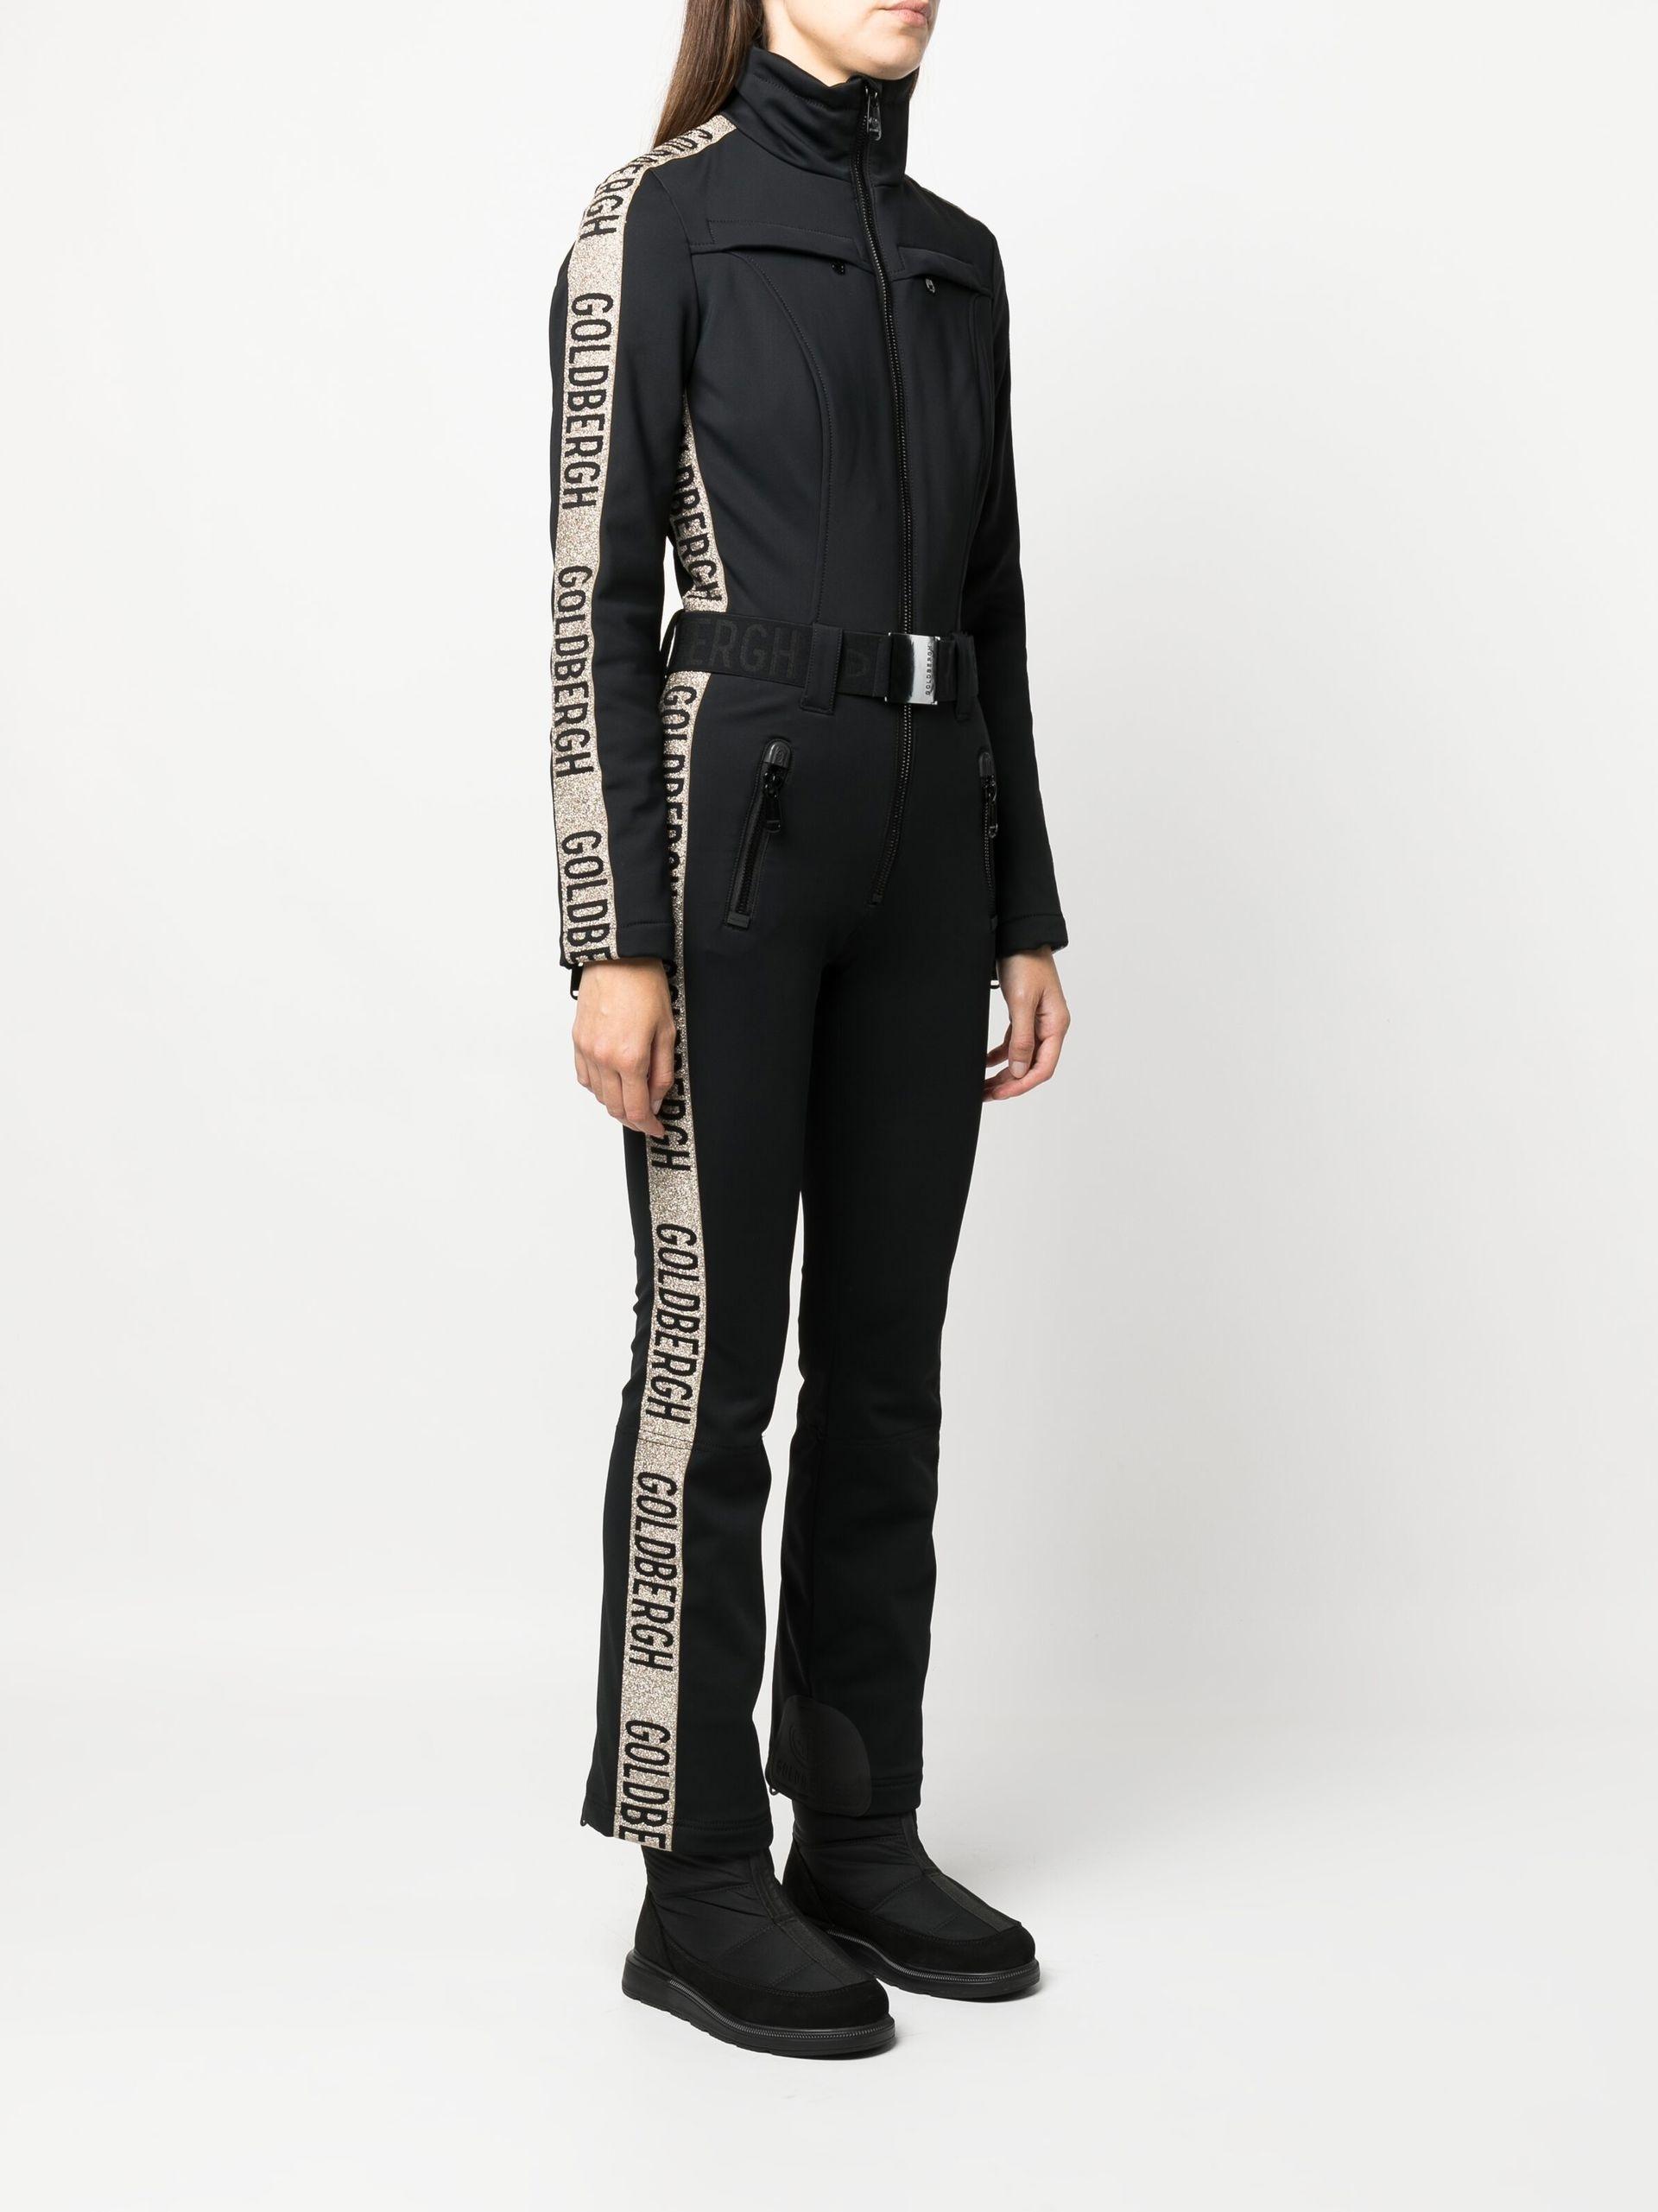 Tether Penelope mat Goldbergh Premium Belted Ski Suit in Black | Lyst